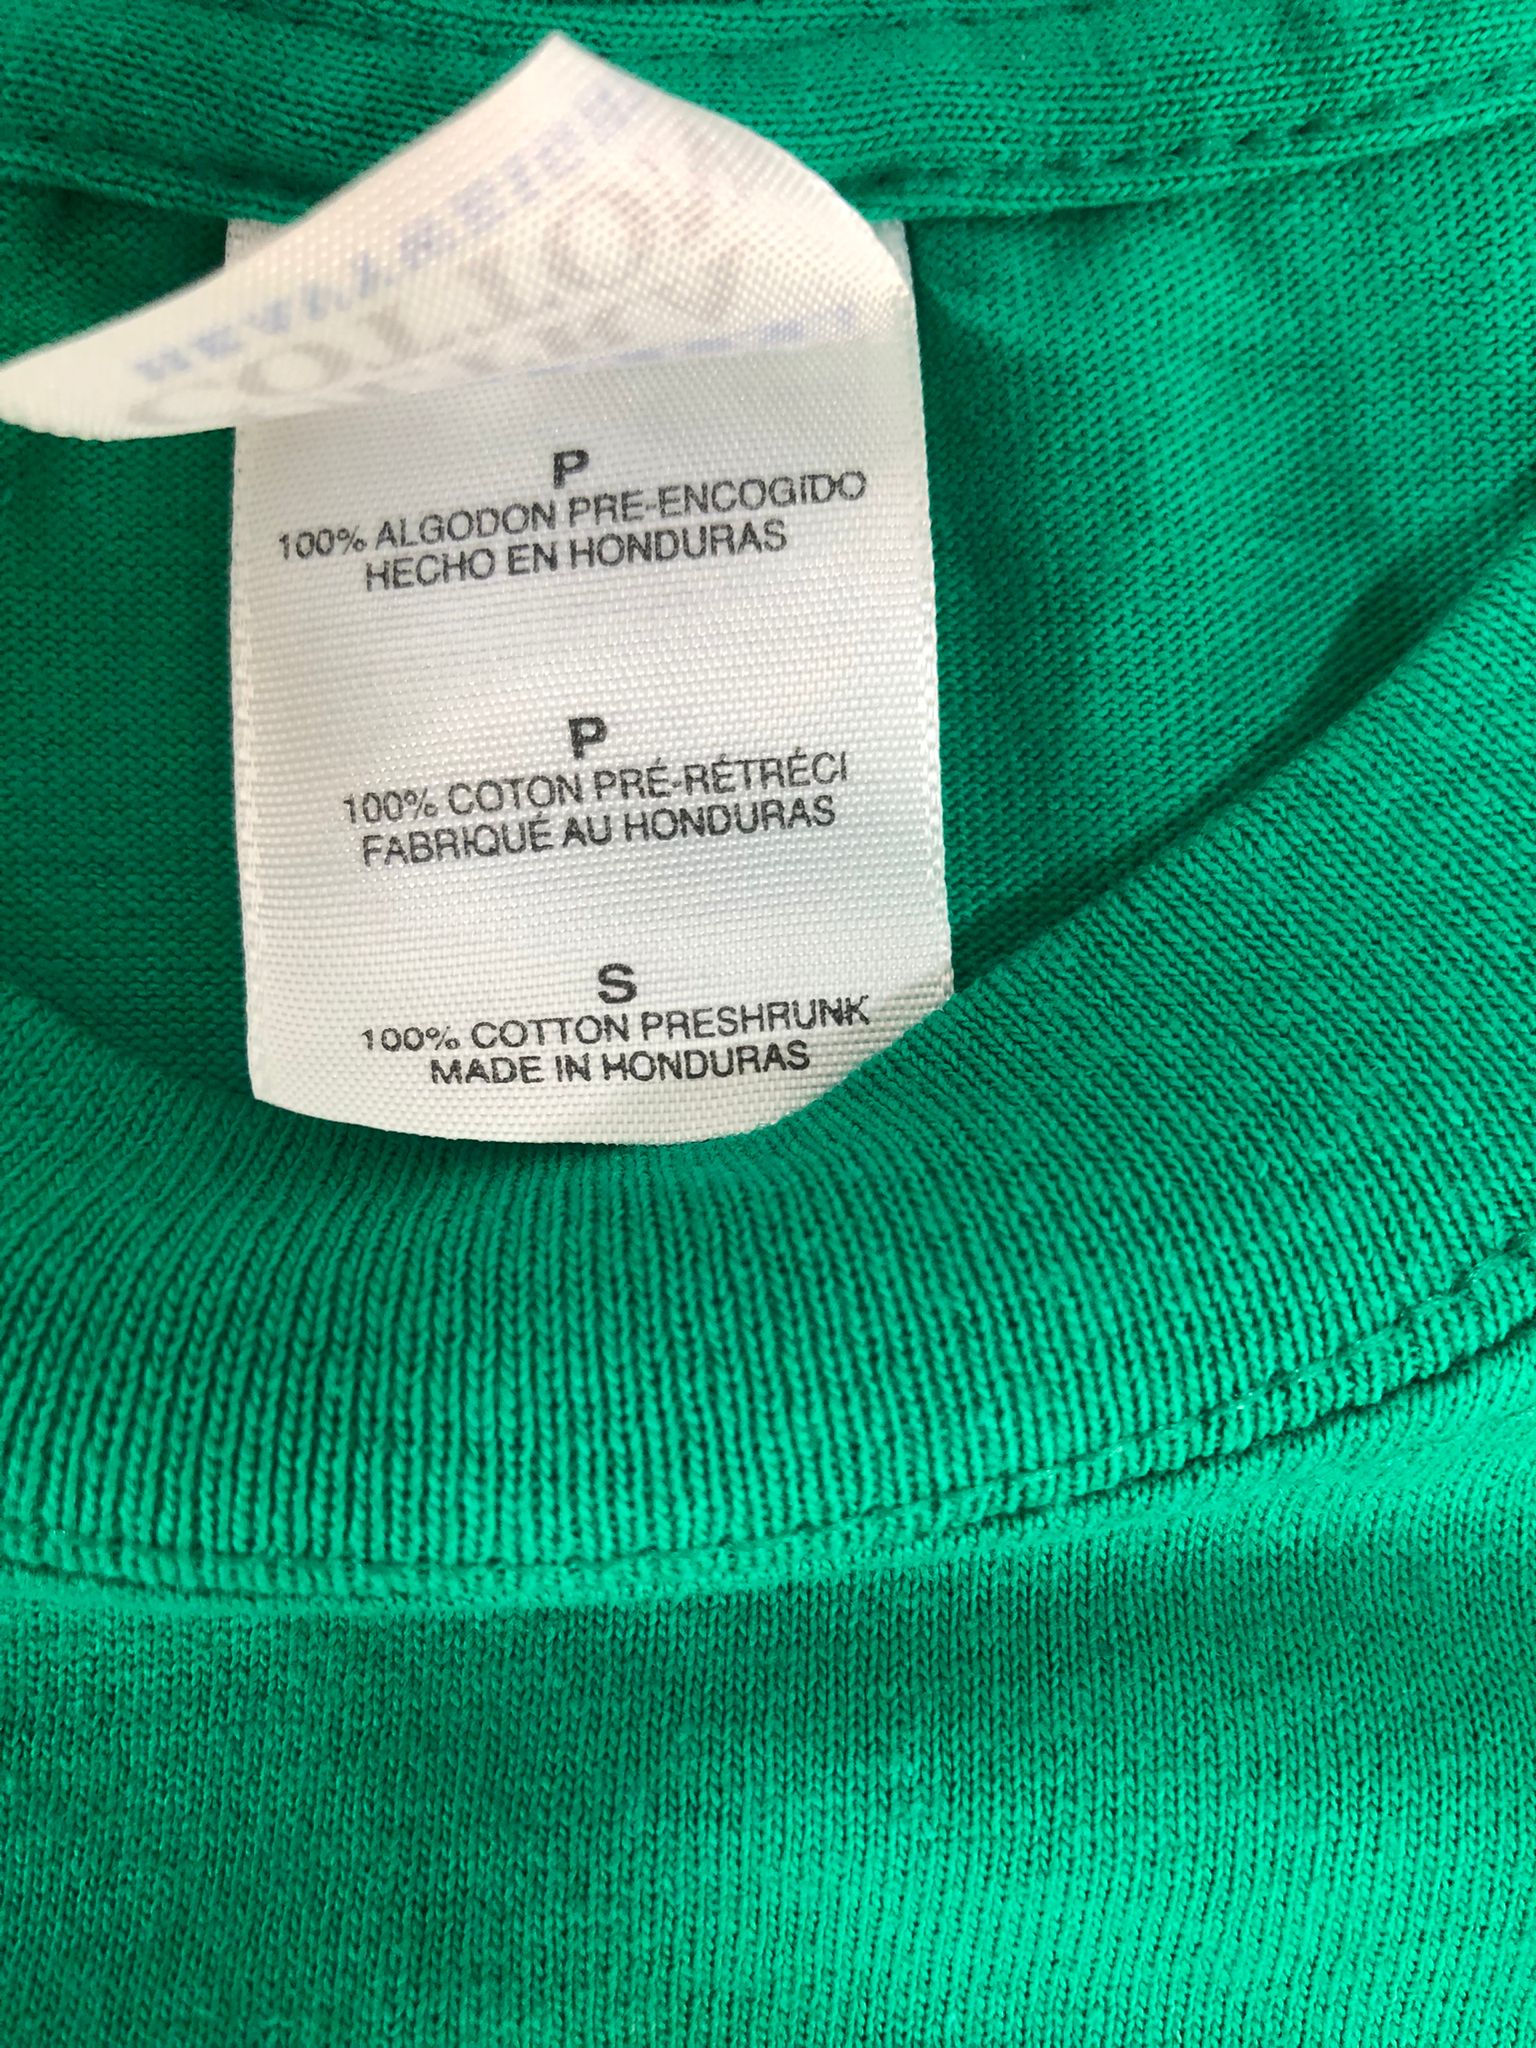 3B Scientific 100% Pre Shrunk Cotton I'm Green Small Tee Shirt